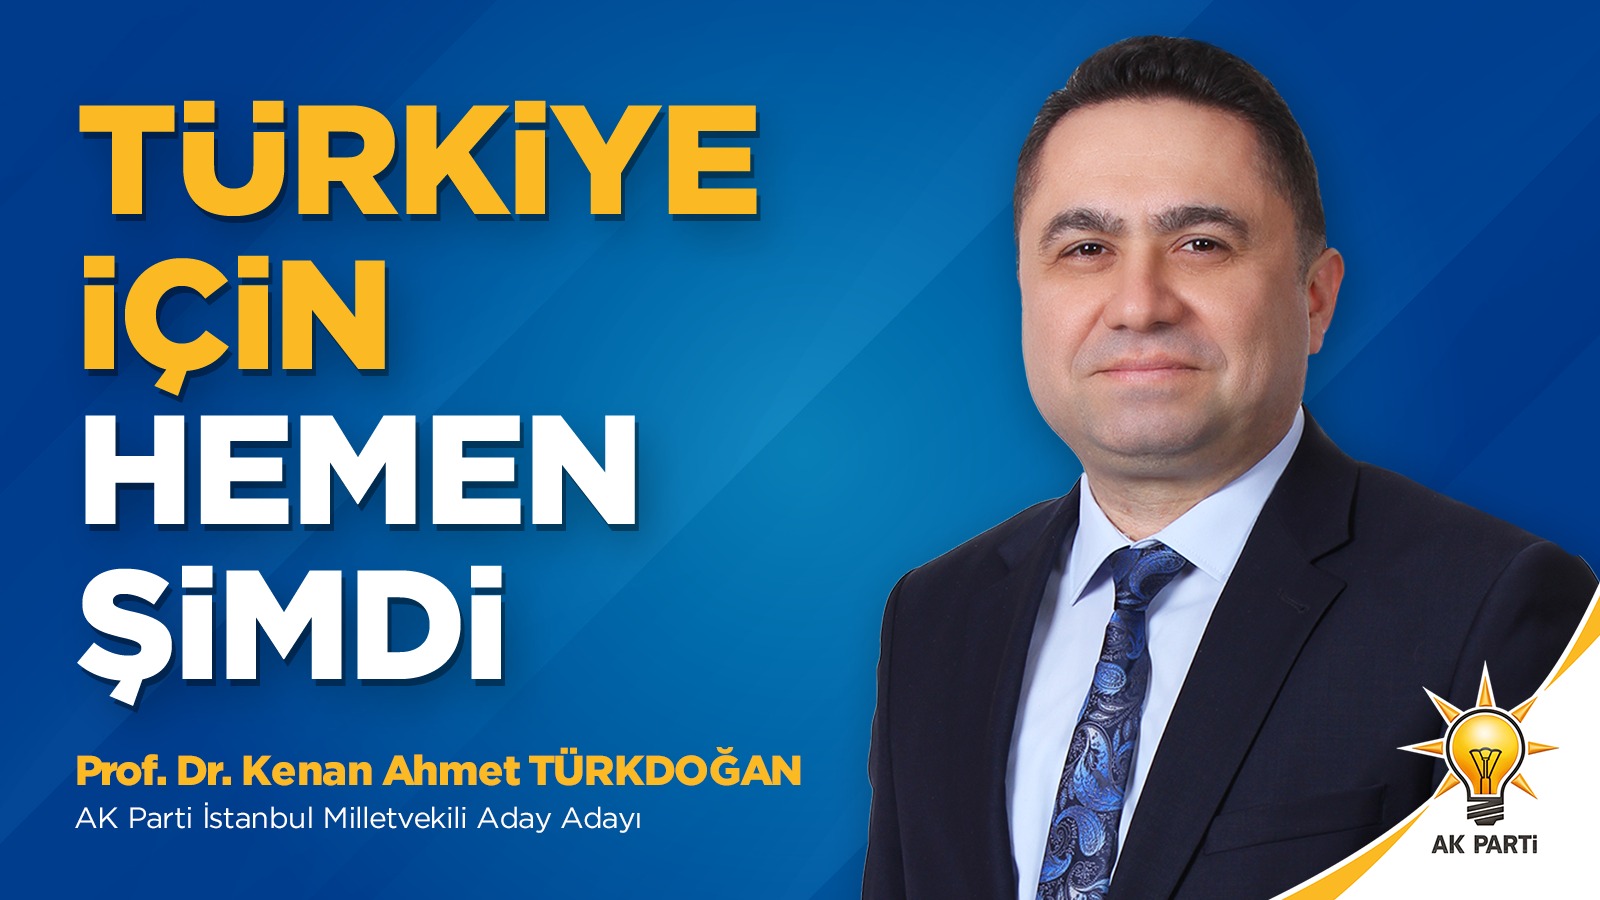 Prof. Kenan Ahmet Türkdoğan Milletvekili Aday Adayı